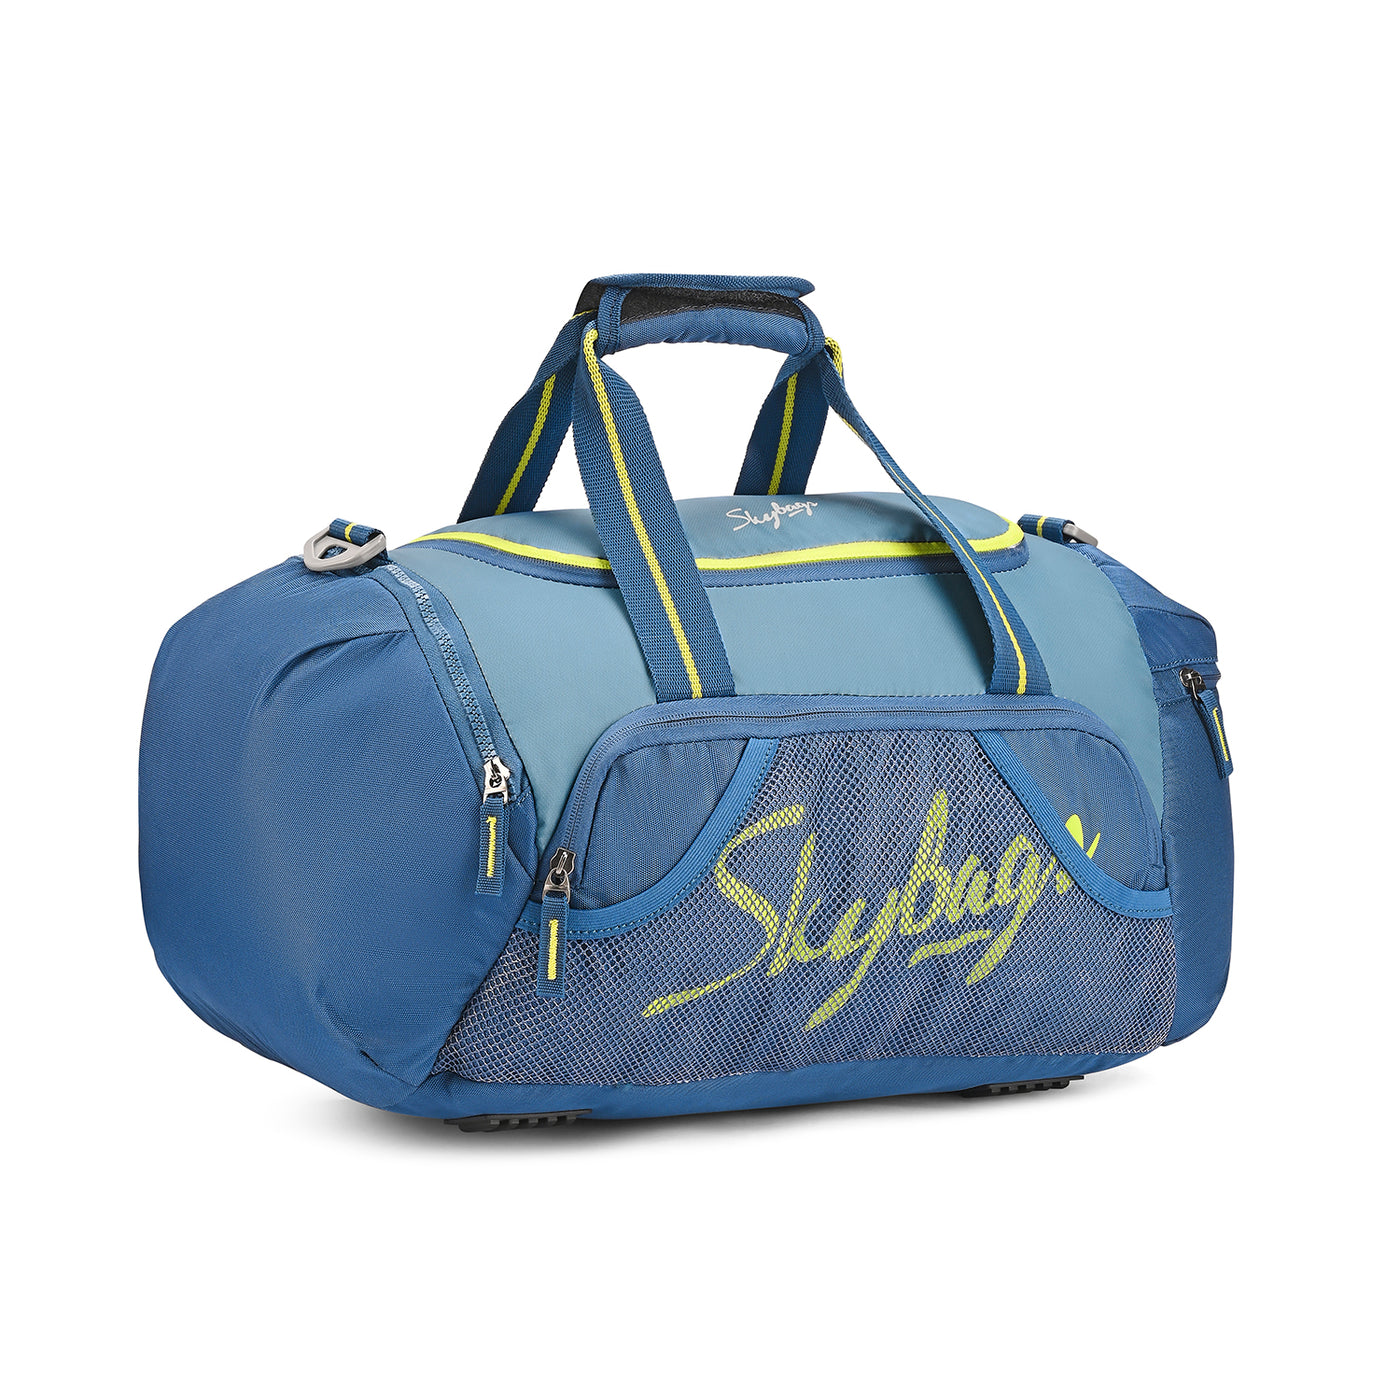 Skybags Athletix Unisex Gym Duffle